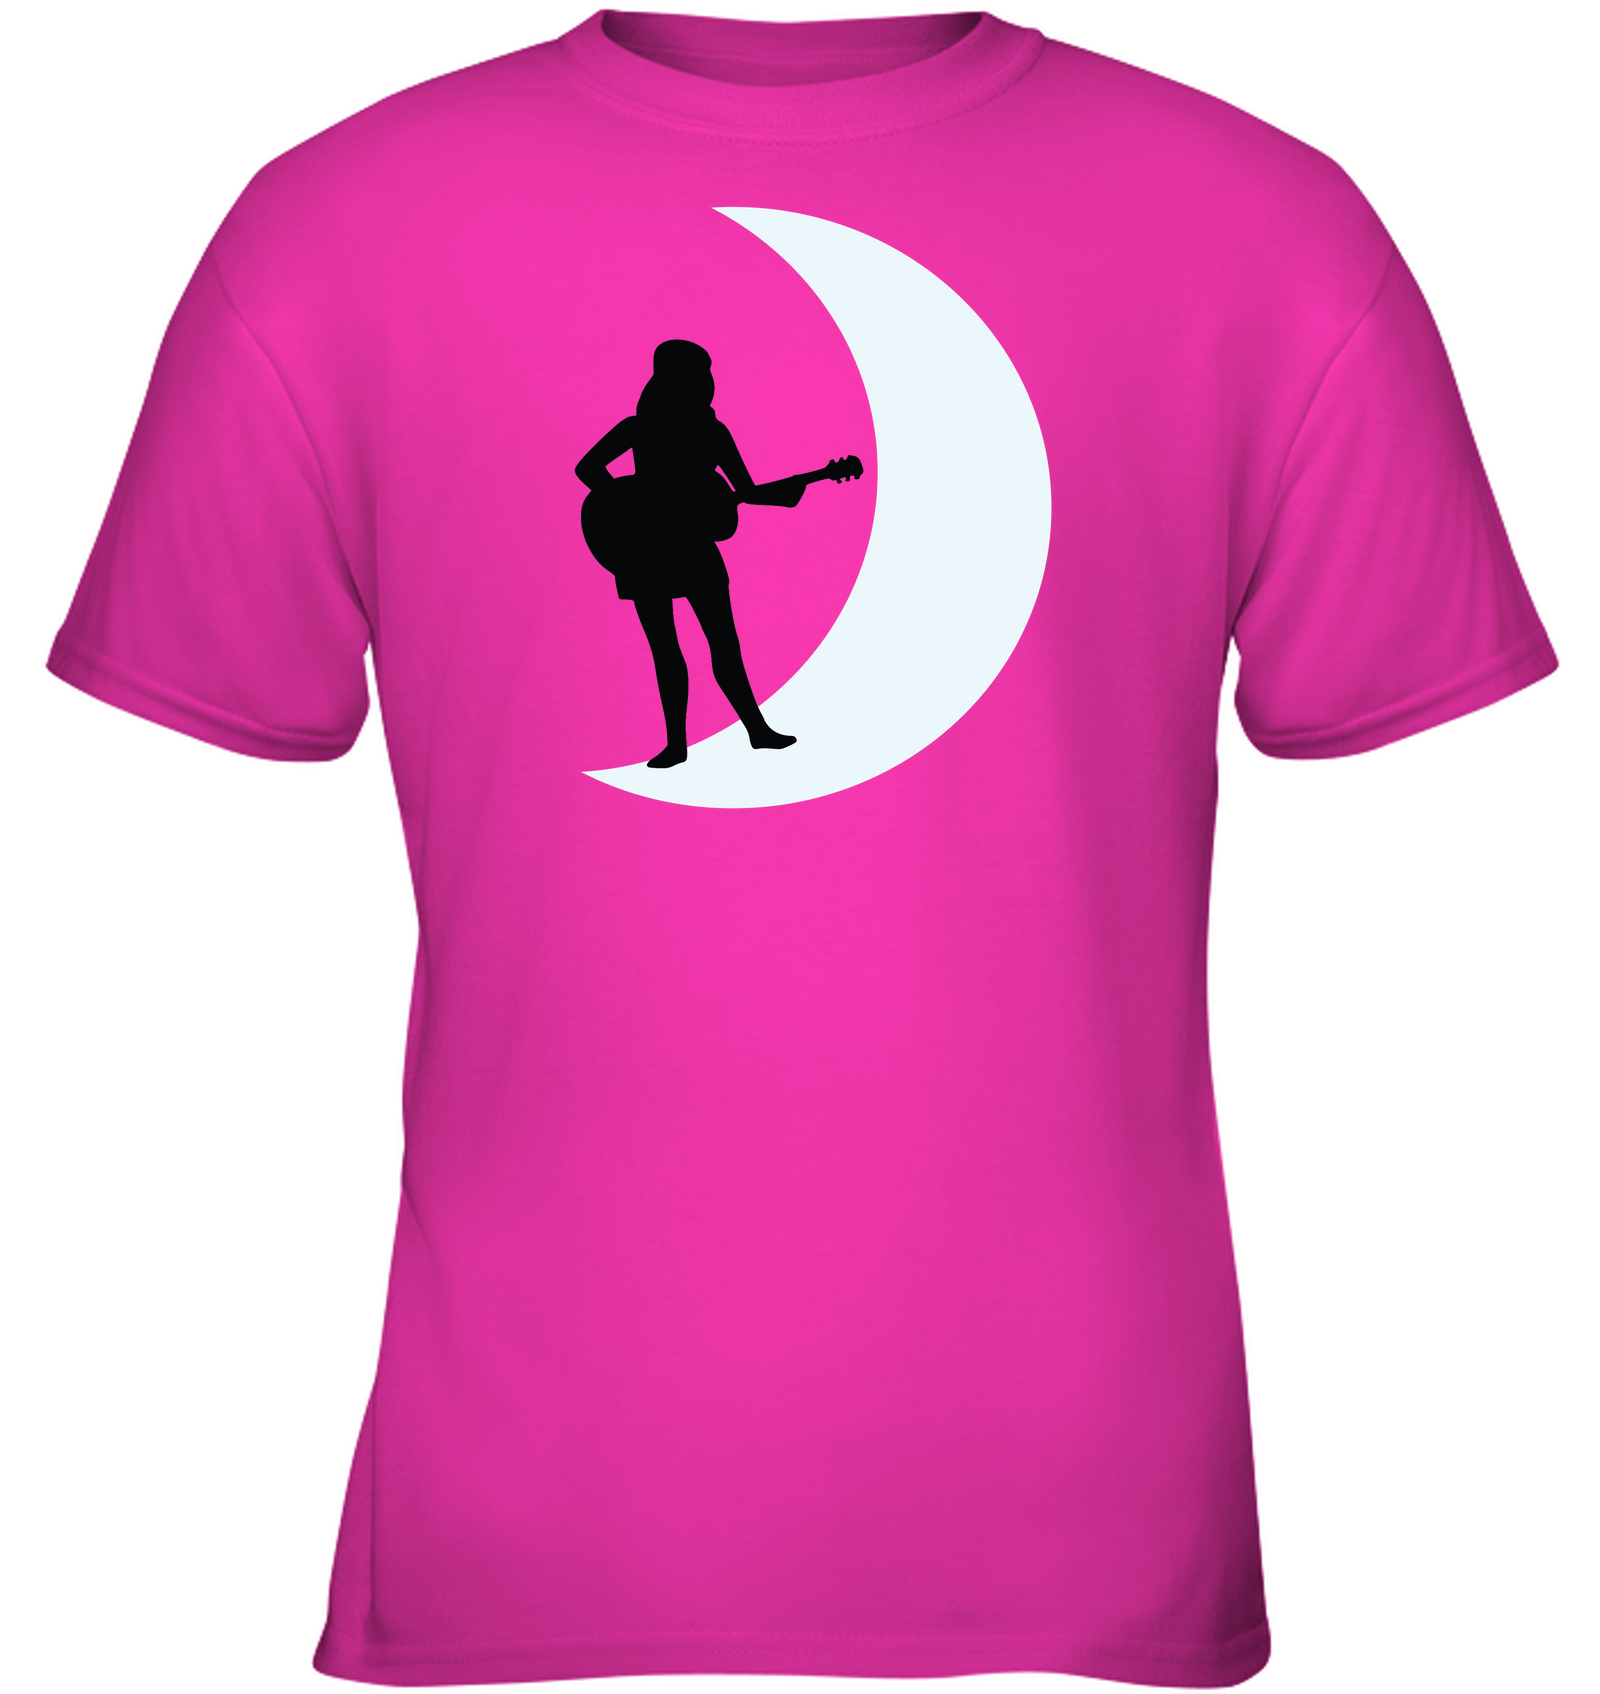 Moonlight Guitar Player White - Gildan Youth Short Sleeve T-Shirt